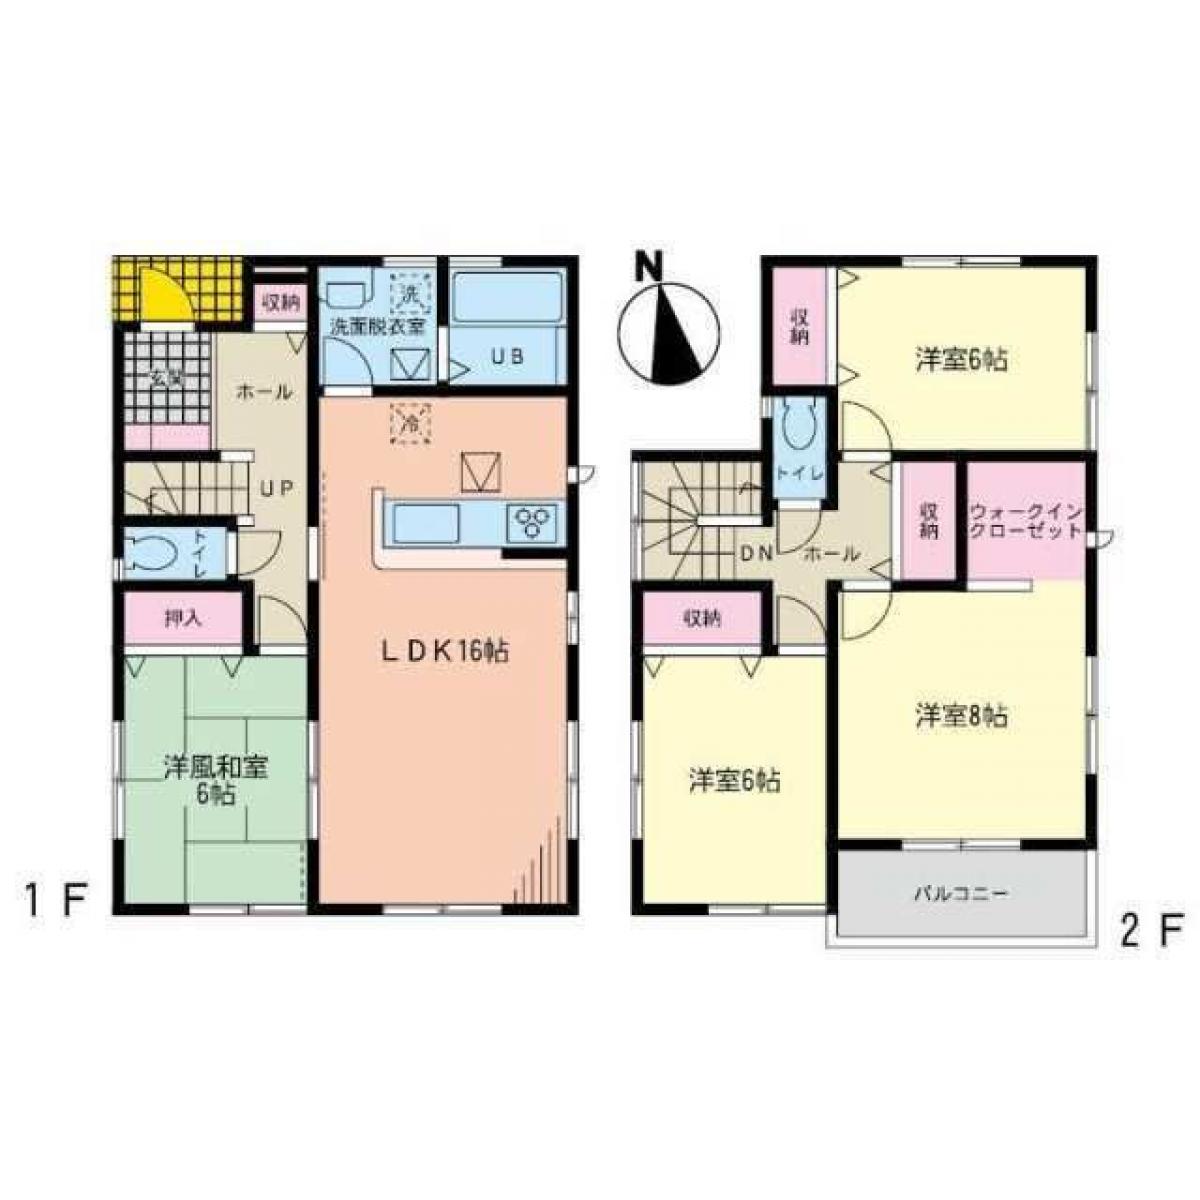 Picture of Home For Sale in Miyagi Gun Rifu Cho, Miyagi, Japan